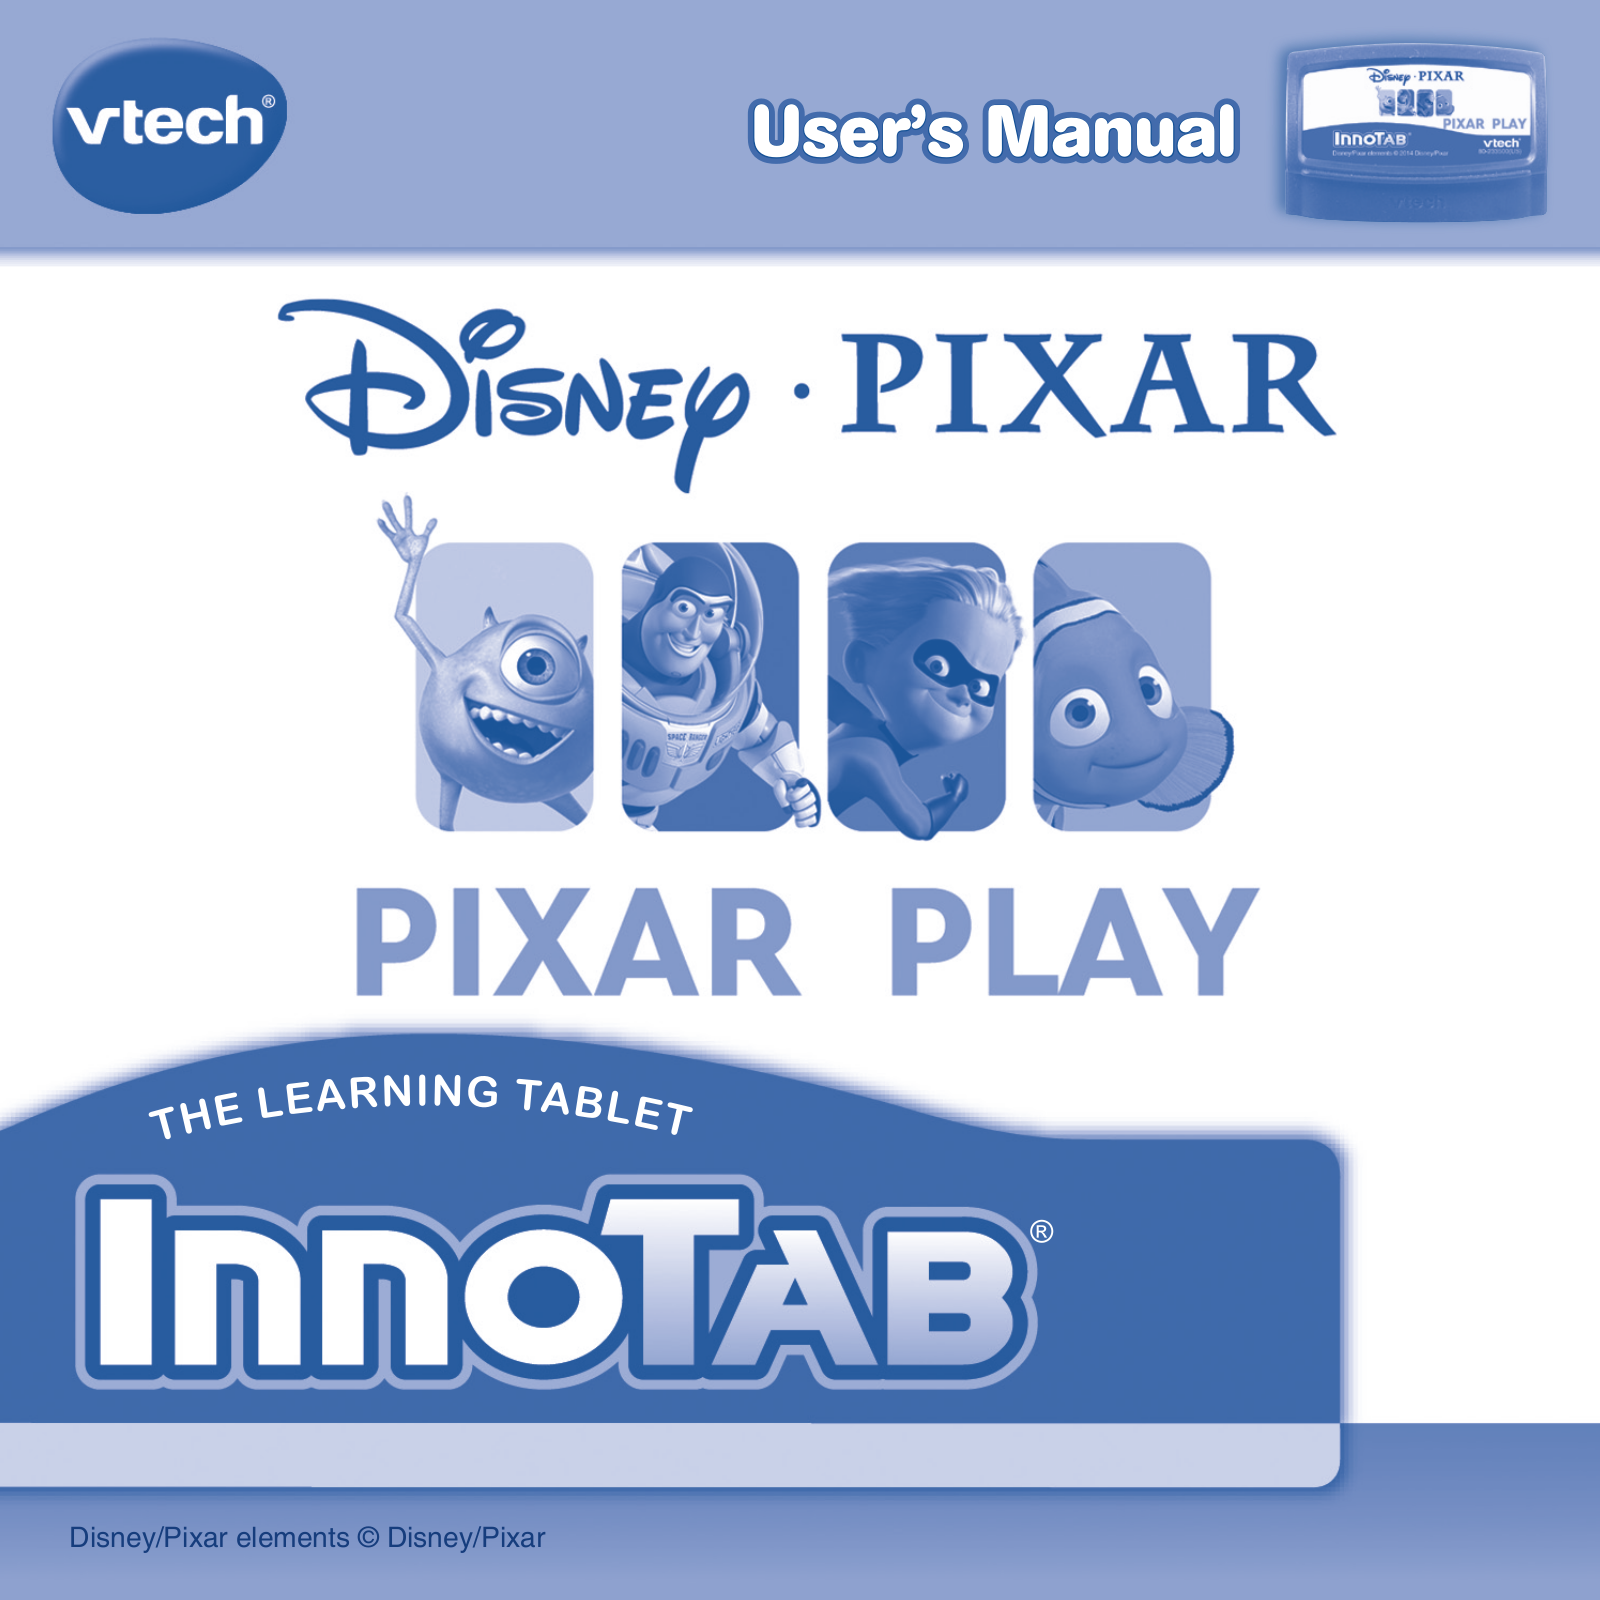 VTech Pixar Play Owner's Manual